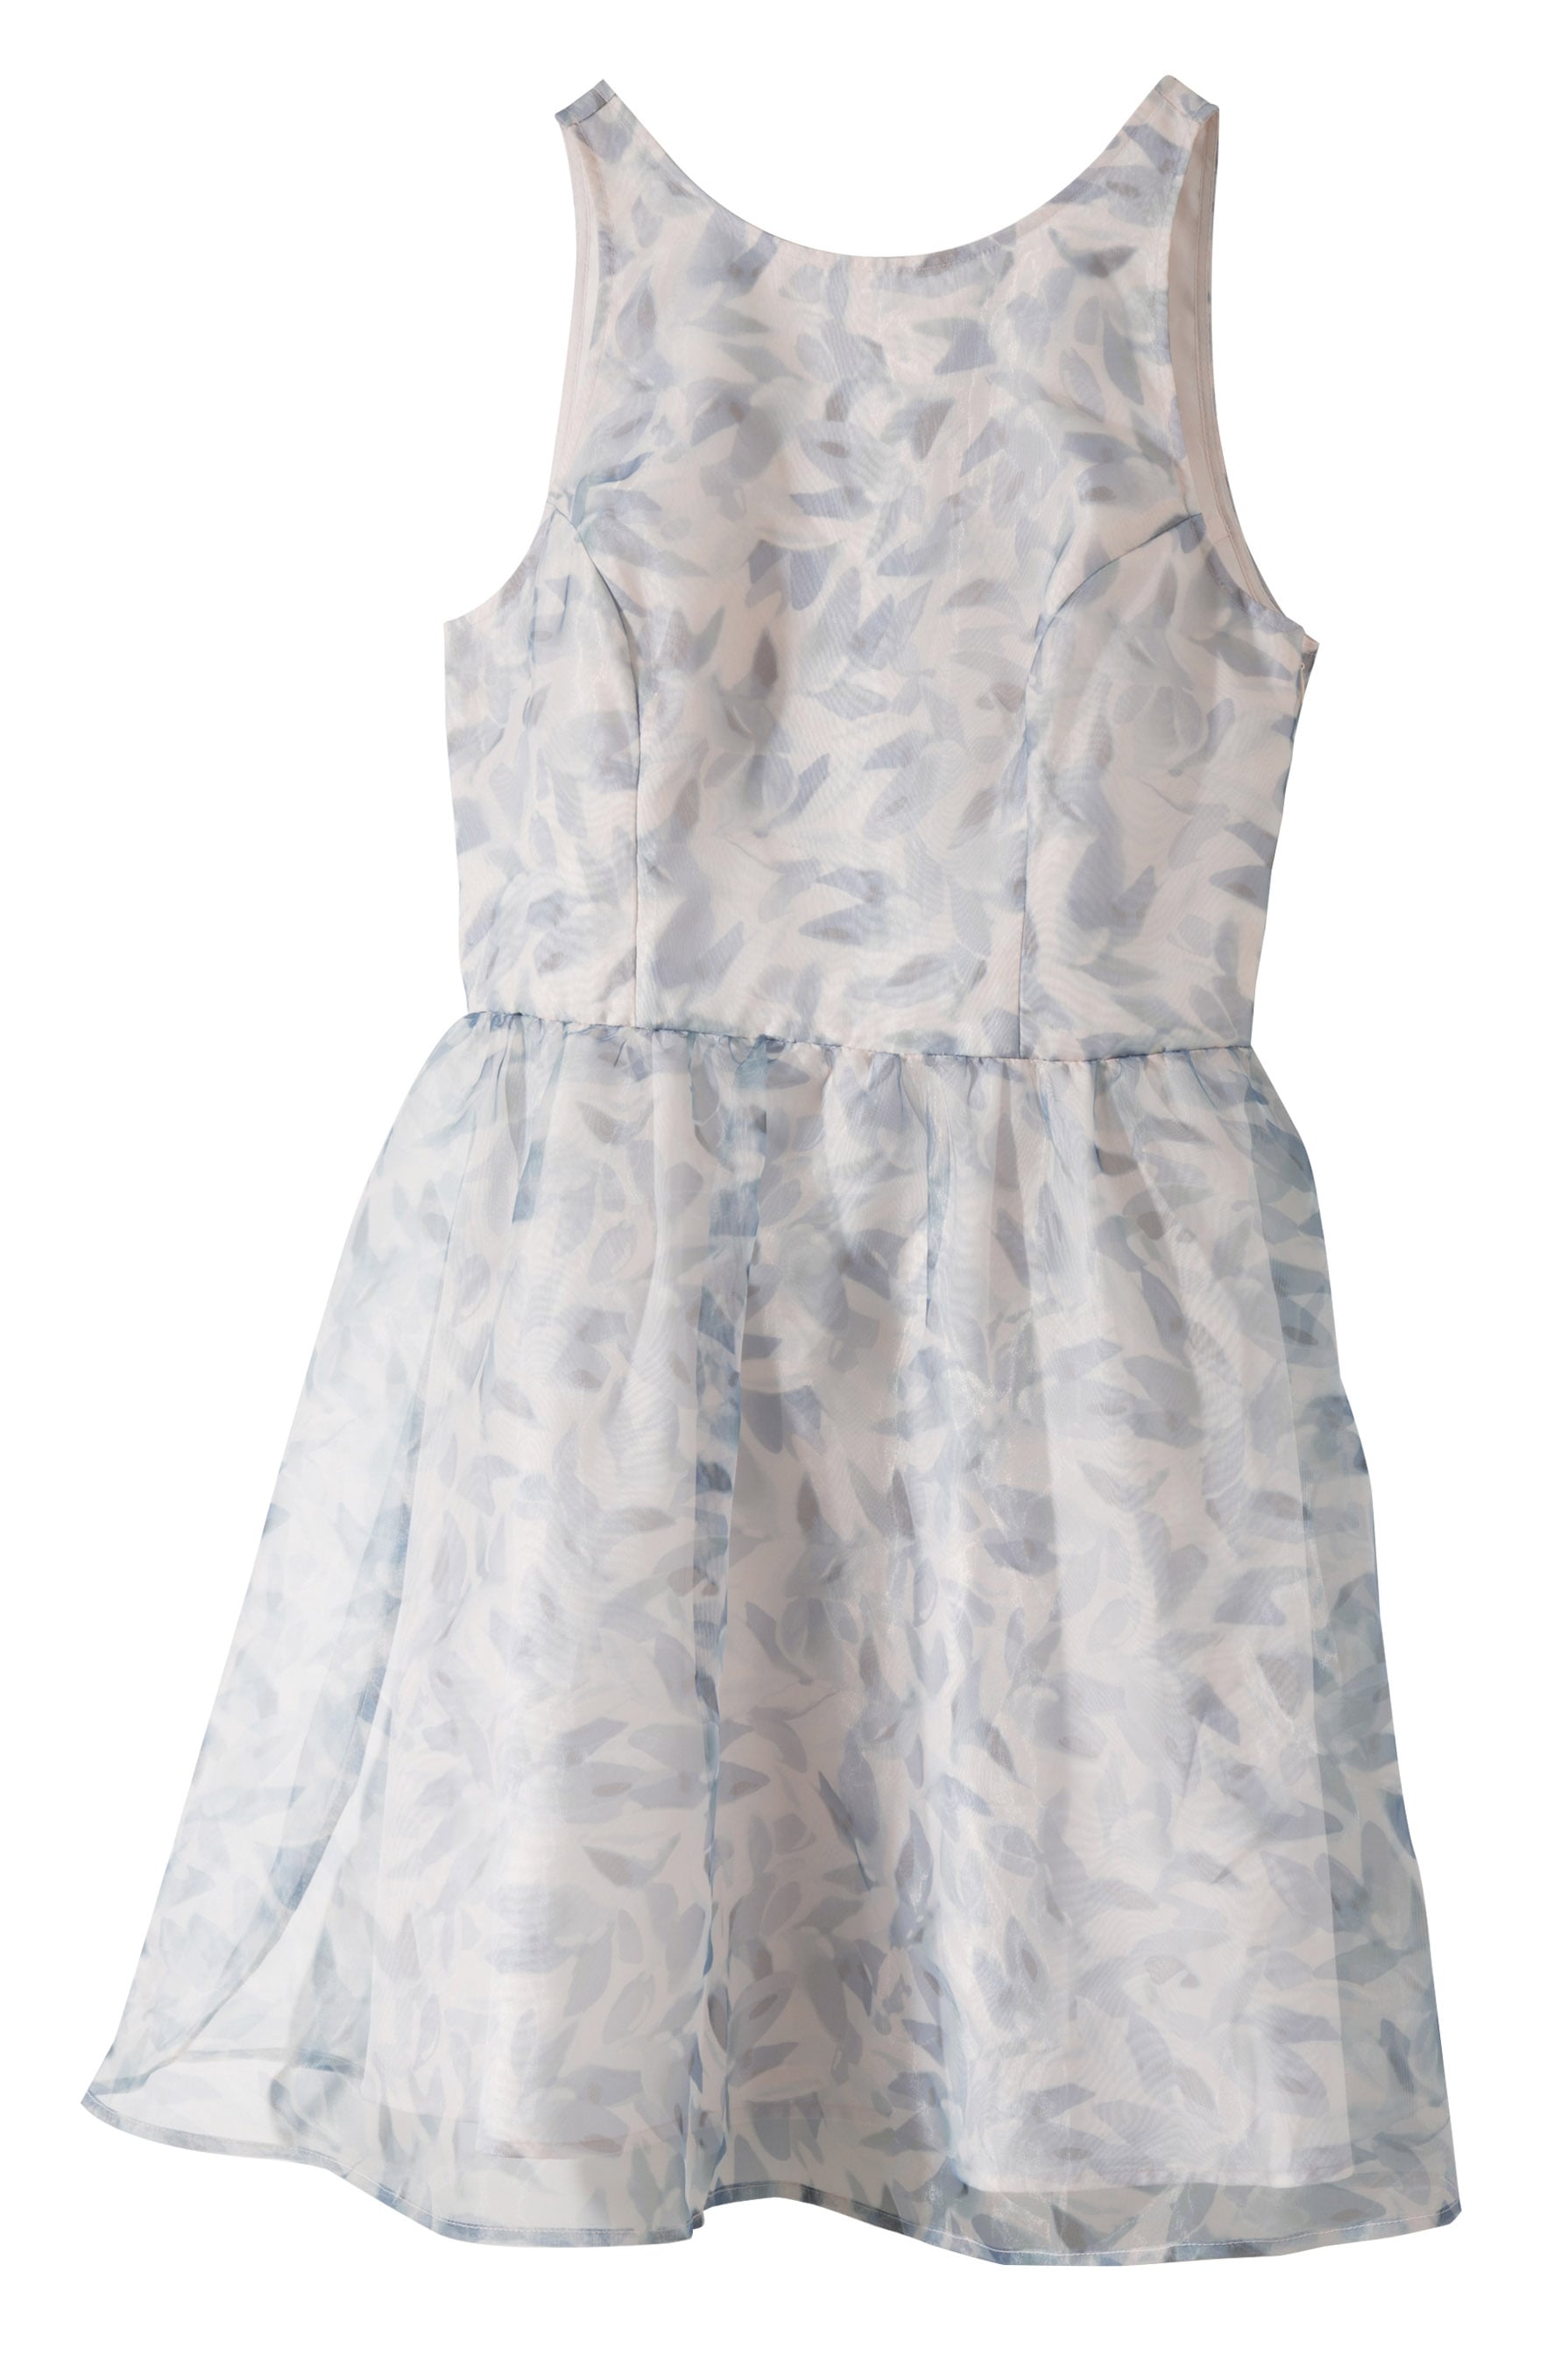 NWT LC Lauren Conrad Make Believe Migrate Gray Organza Dress Size 2